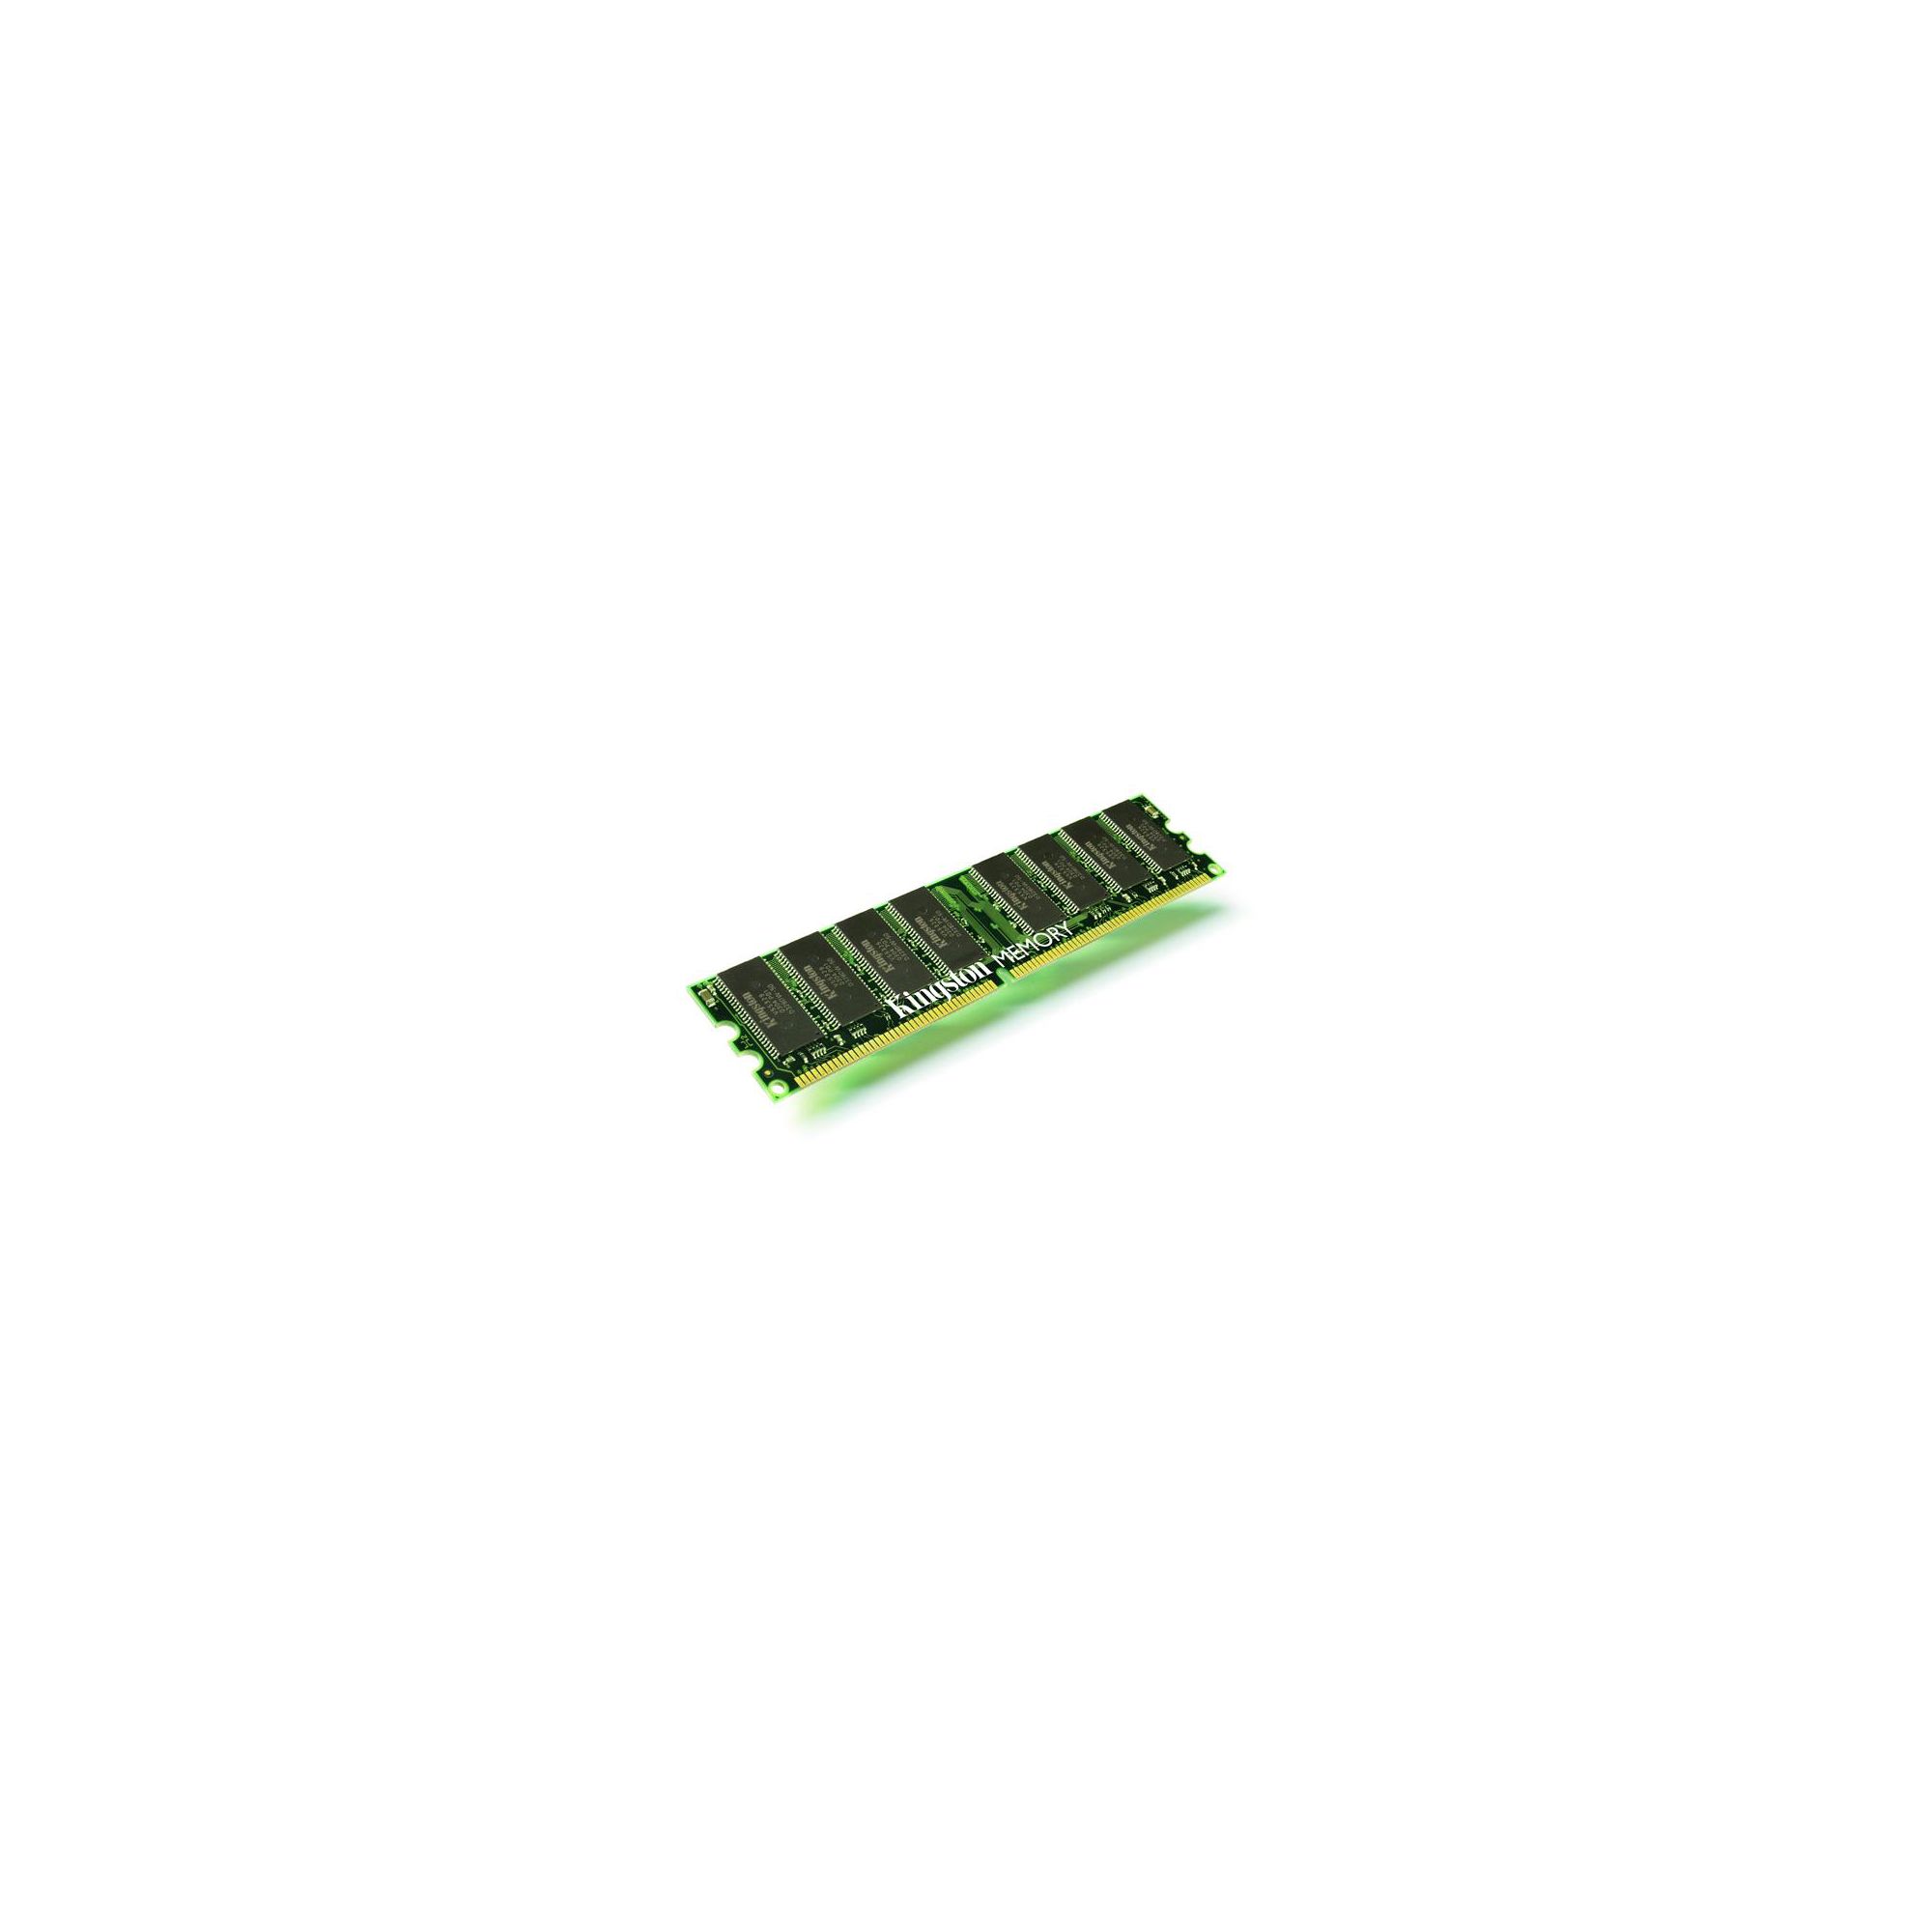 Kingston 8GB (2 x 4GB) PC2-5300 DDR2 SDRAM DIMM Memory Module at Tesco Direct